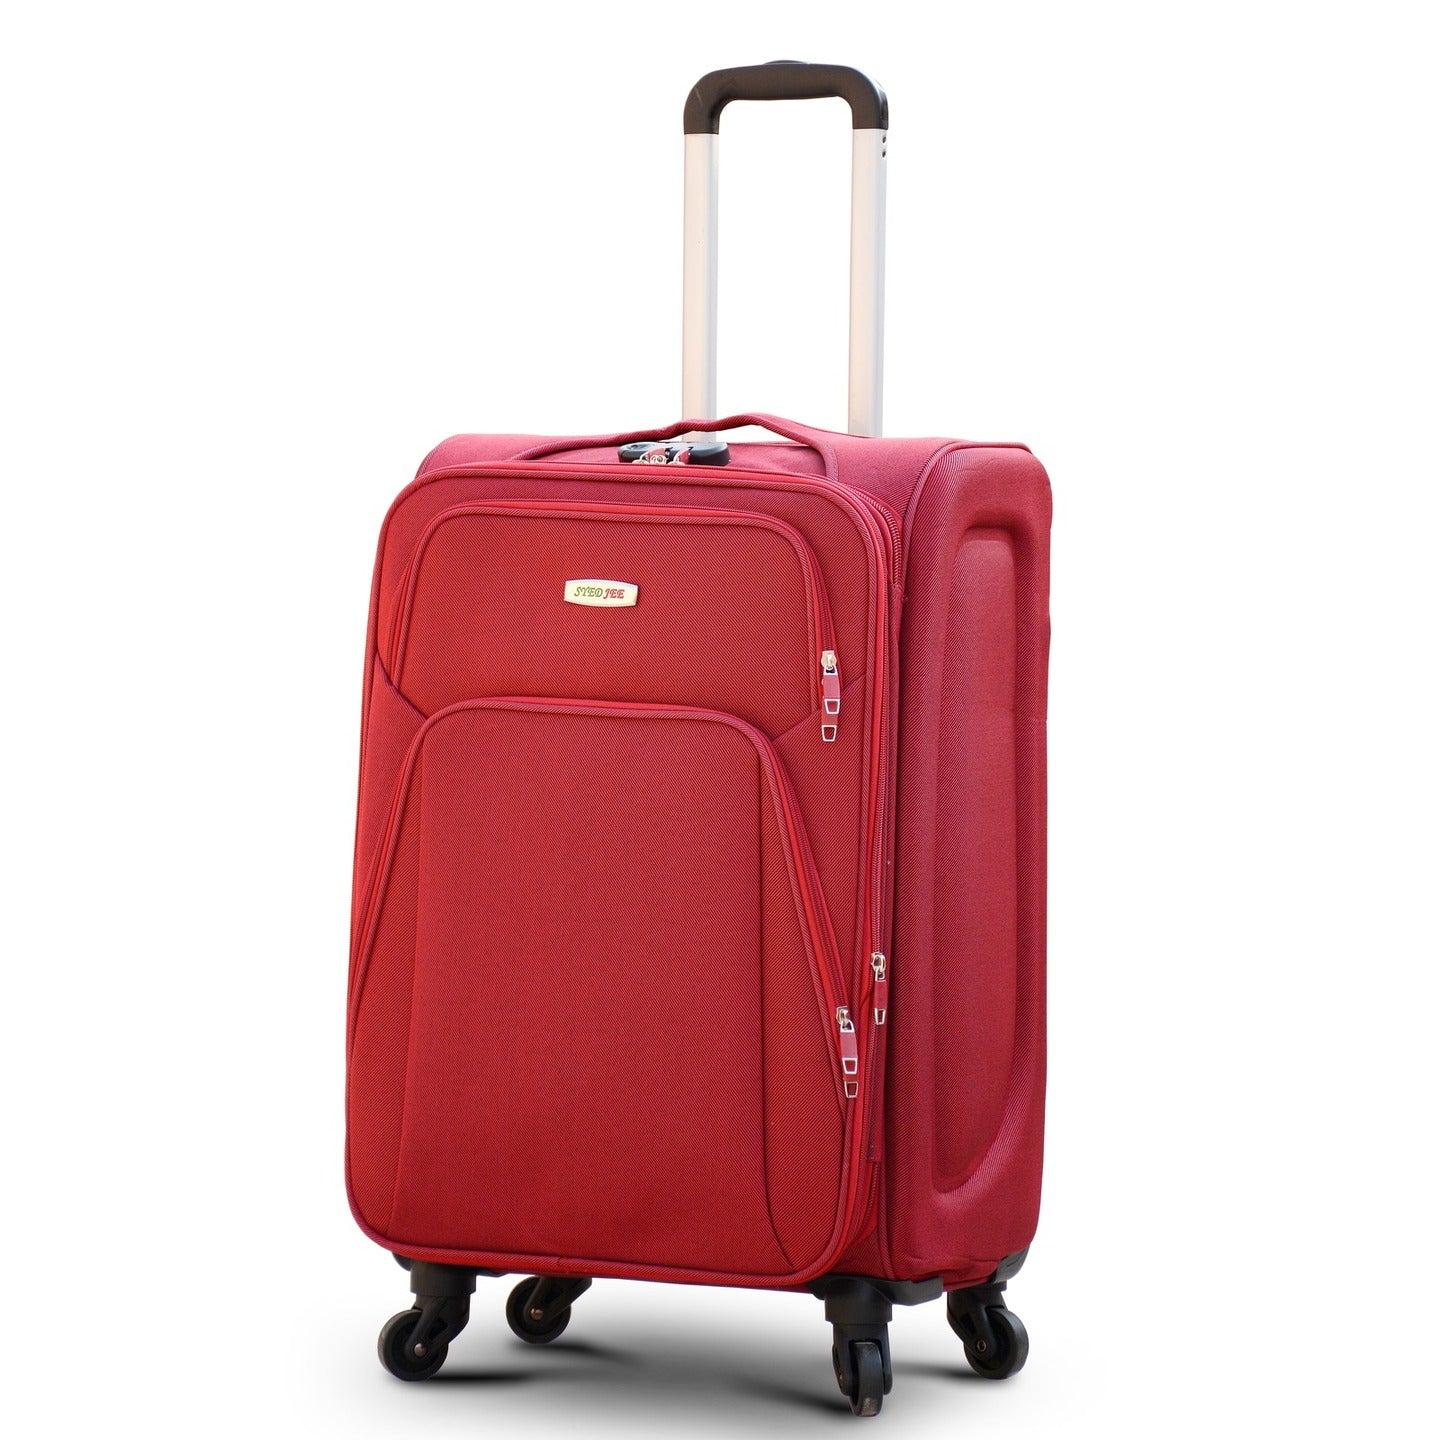 24" SJ JIAN 4 Wheel Lightweight Soft Material Luggage Bag